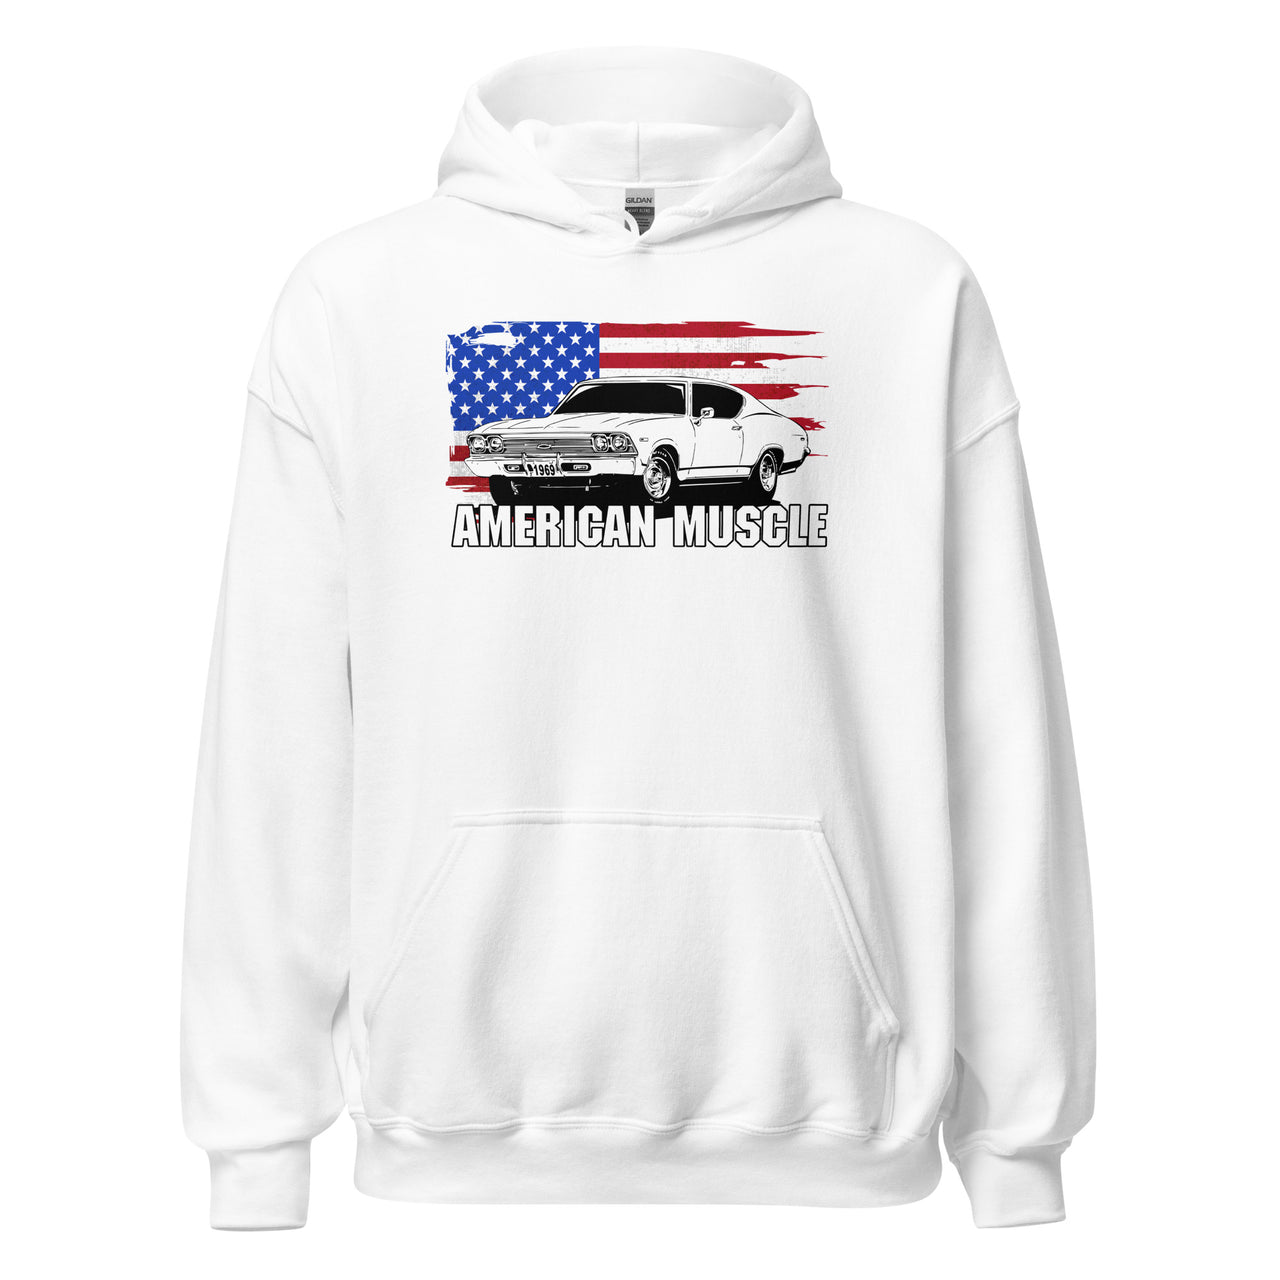 1969 Chevelle Car Hoodie Sweatshirt in white